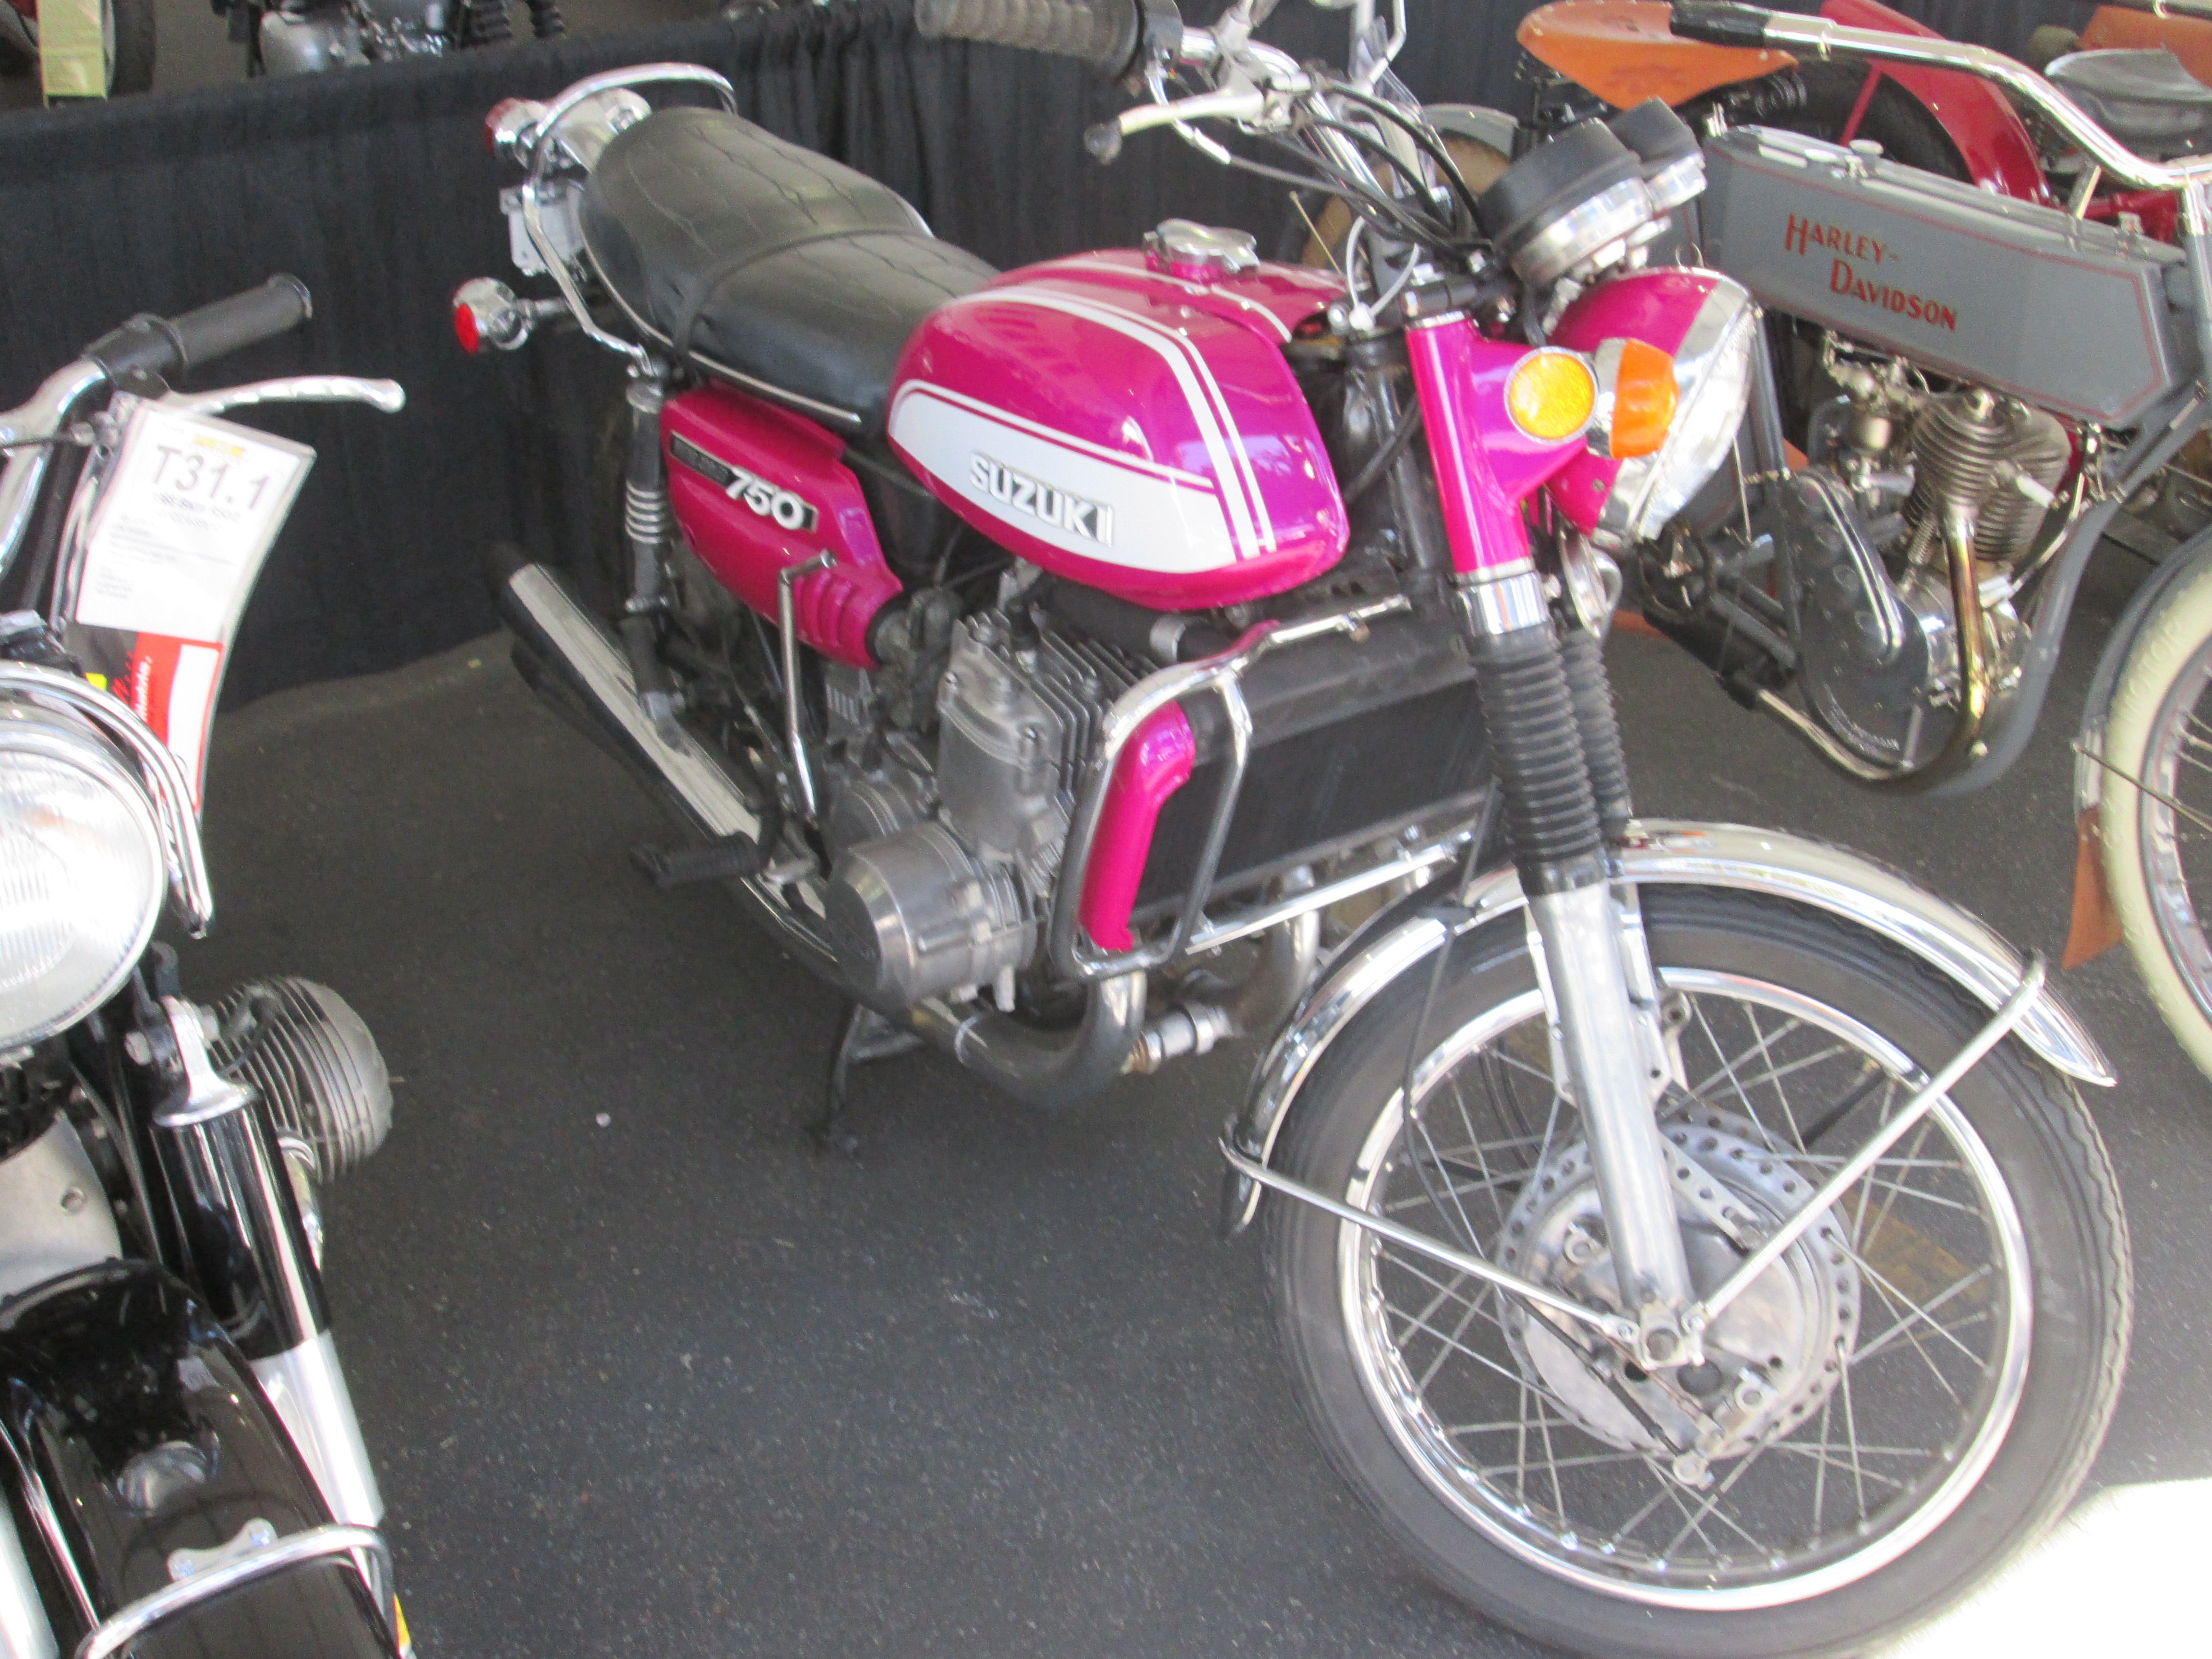 1975 Suzuki GT750 LeMans - National Motorcycle Museum